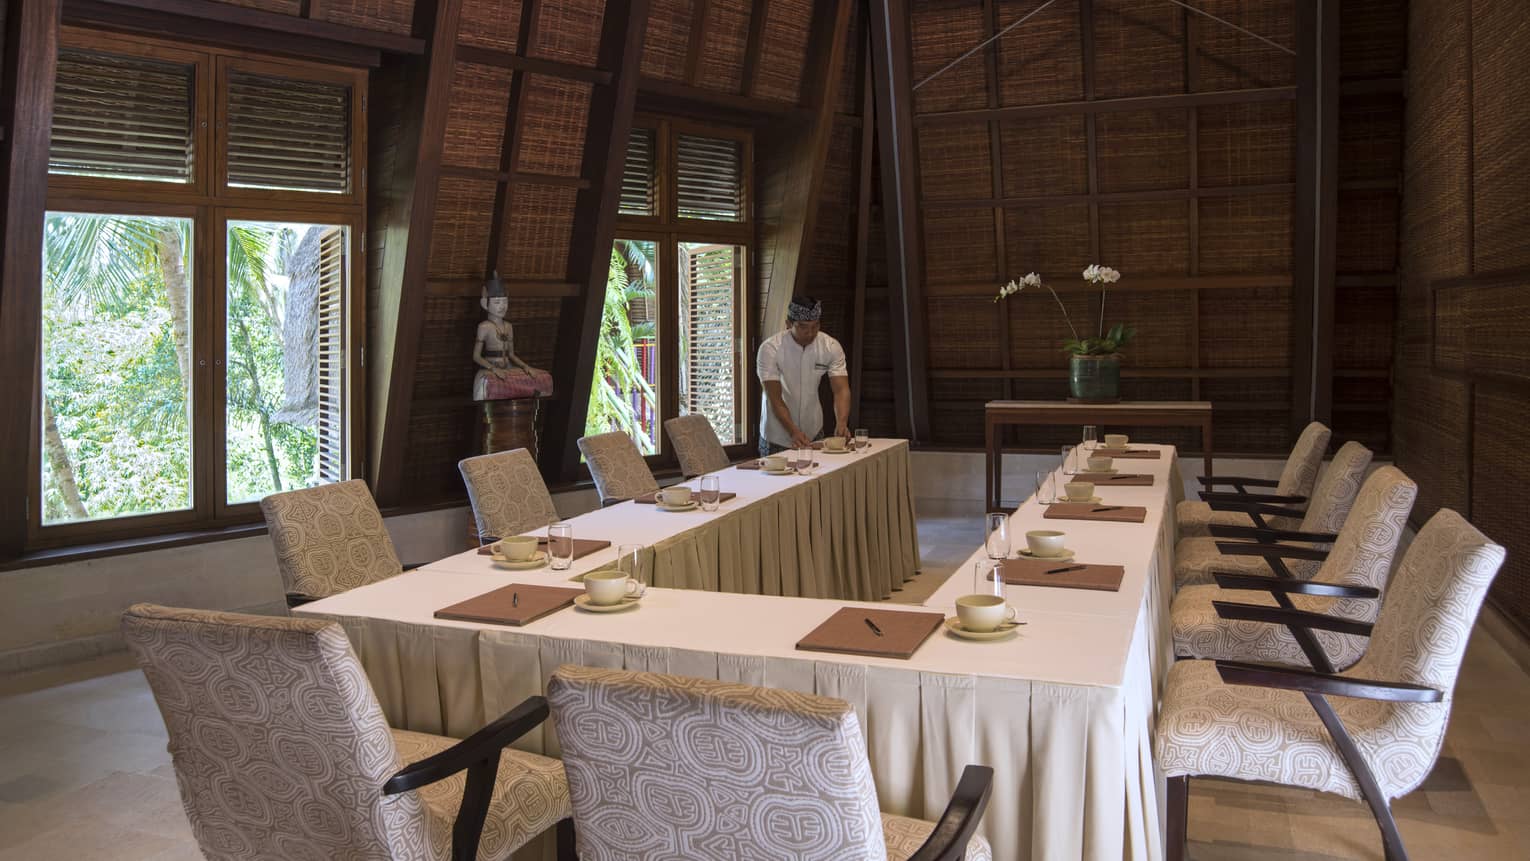 Hotel staff sets modular meeting table in Tirta Sari pavilion room near large windows